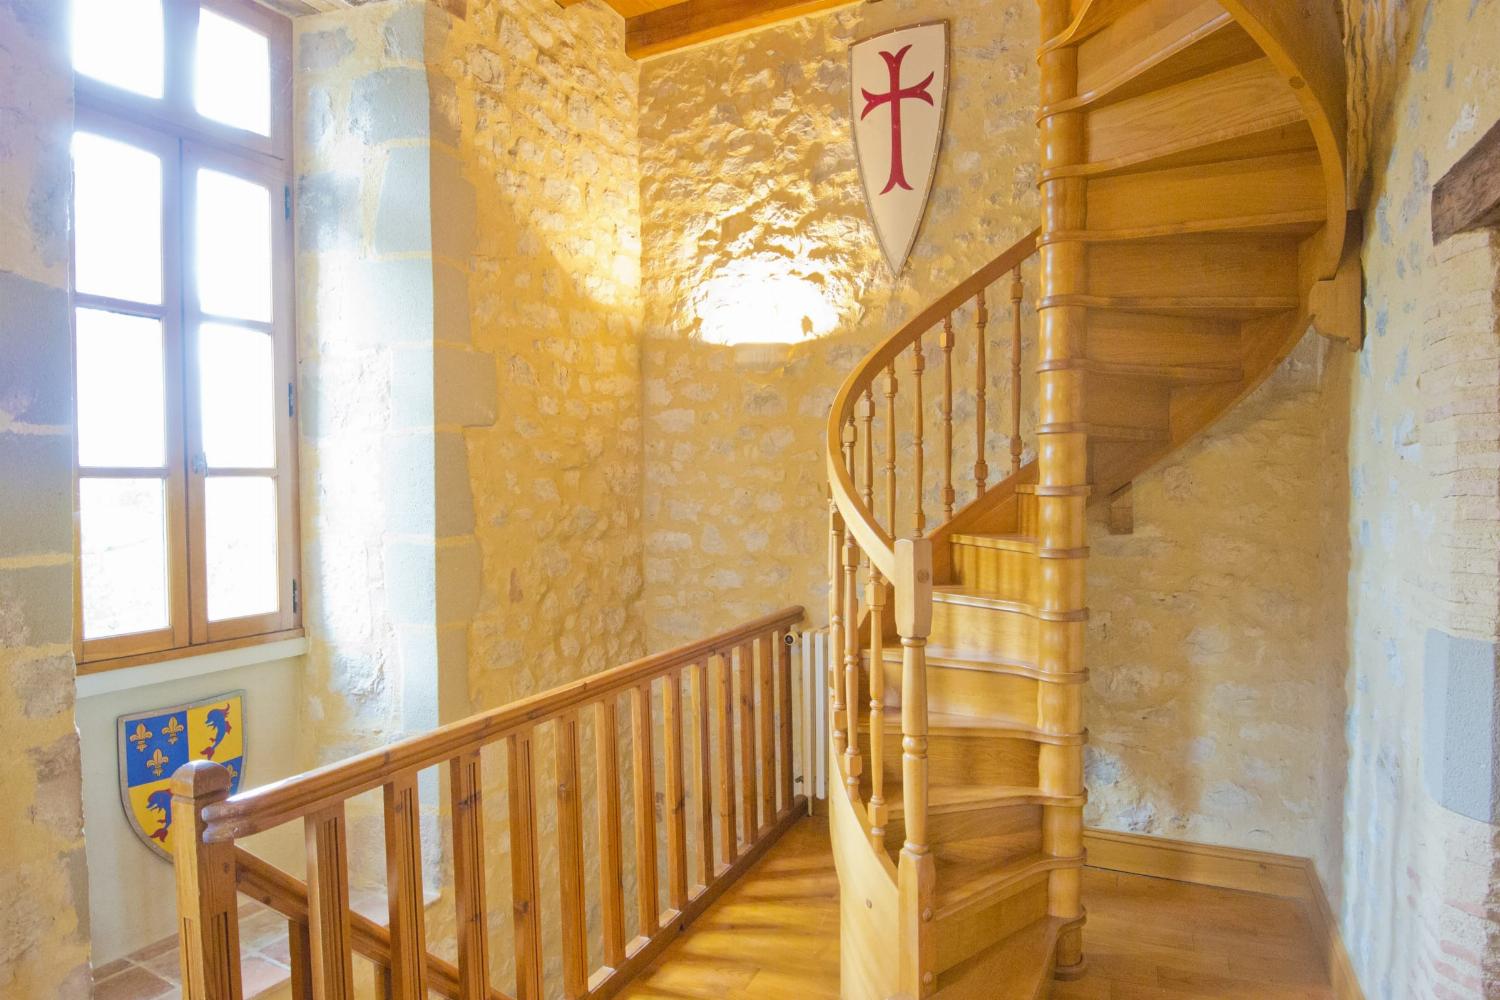 Escalier | Château de vacances en Dordogne